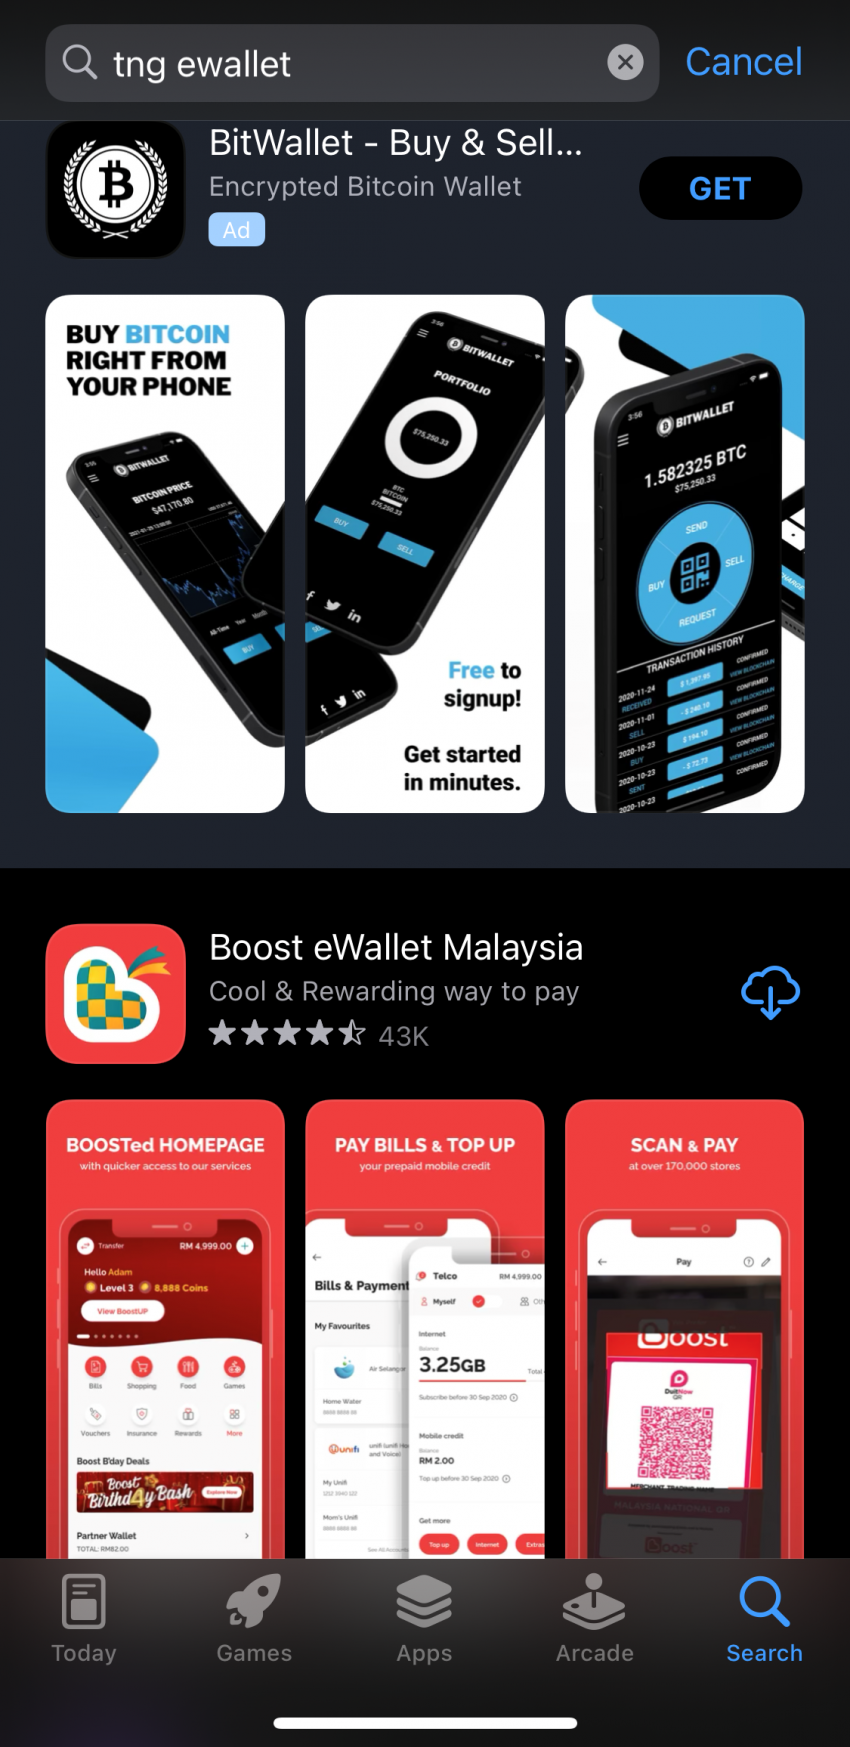 Touch n’ Go eWallet app no longer on Apple App Store Image #1452525